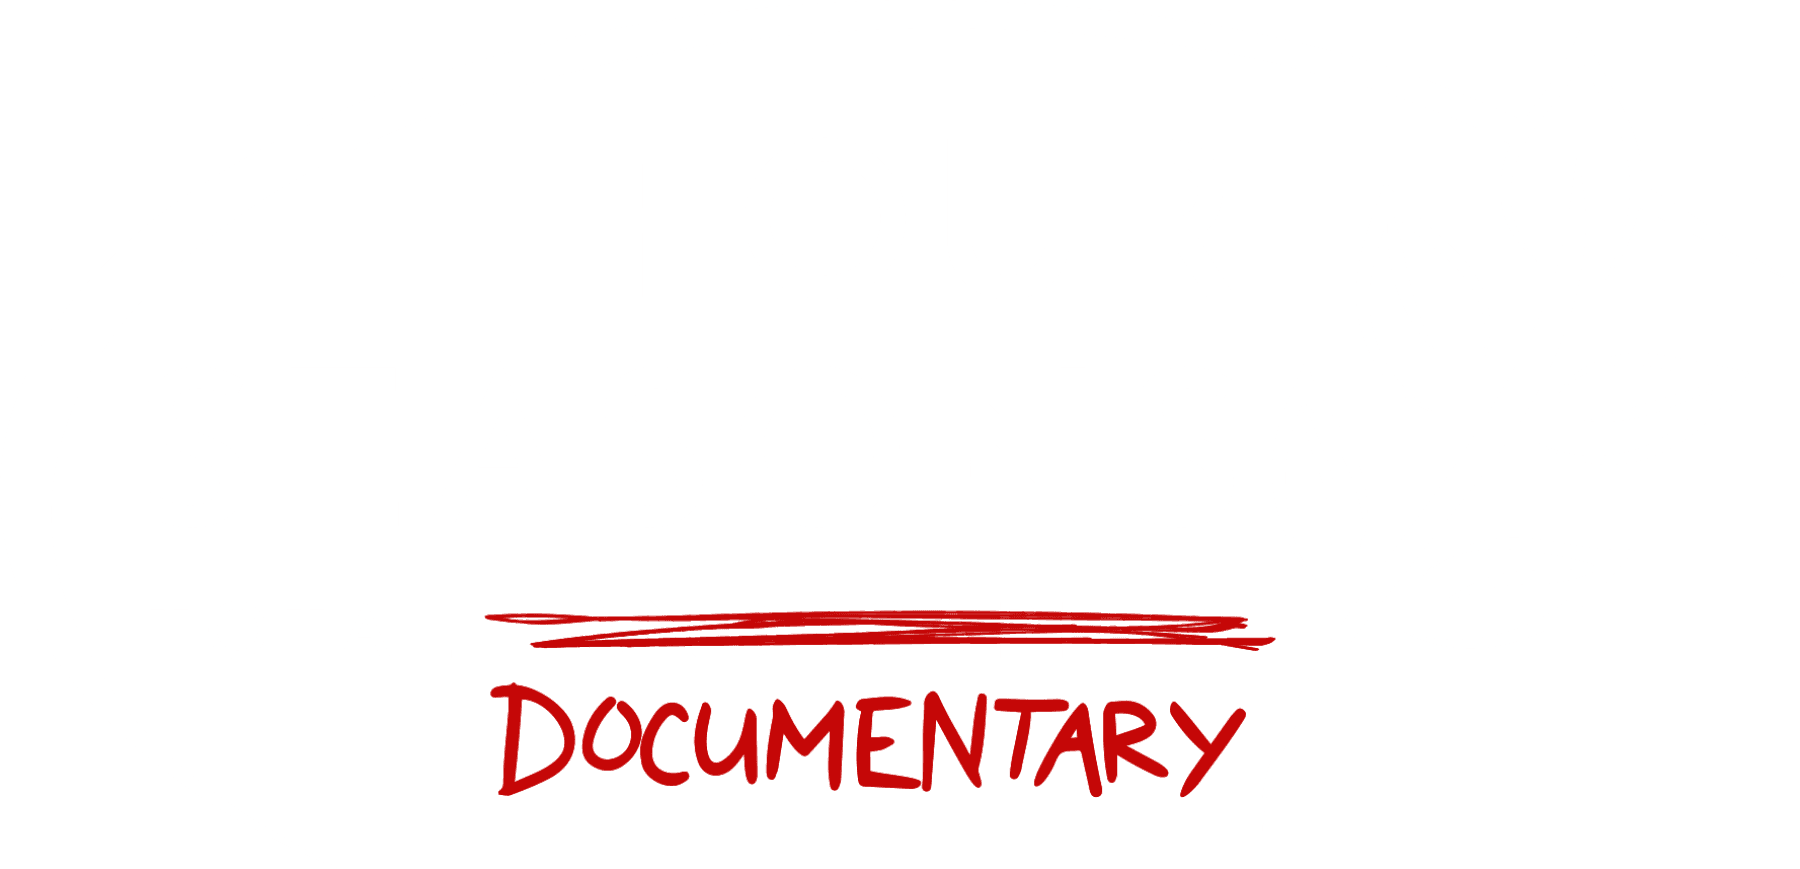 Four Seasons Total Documentary logo